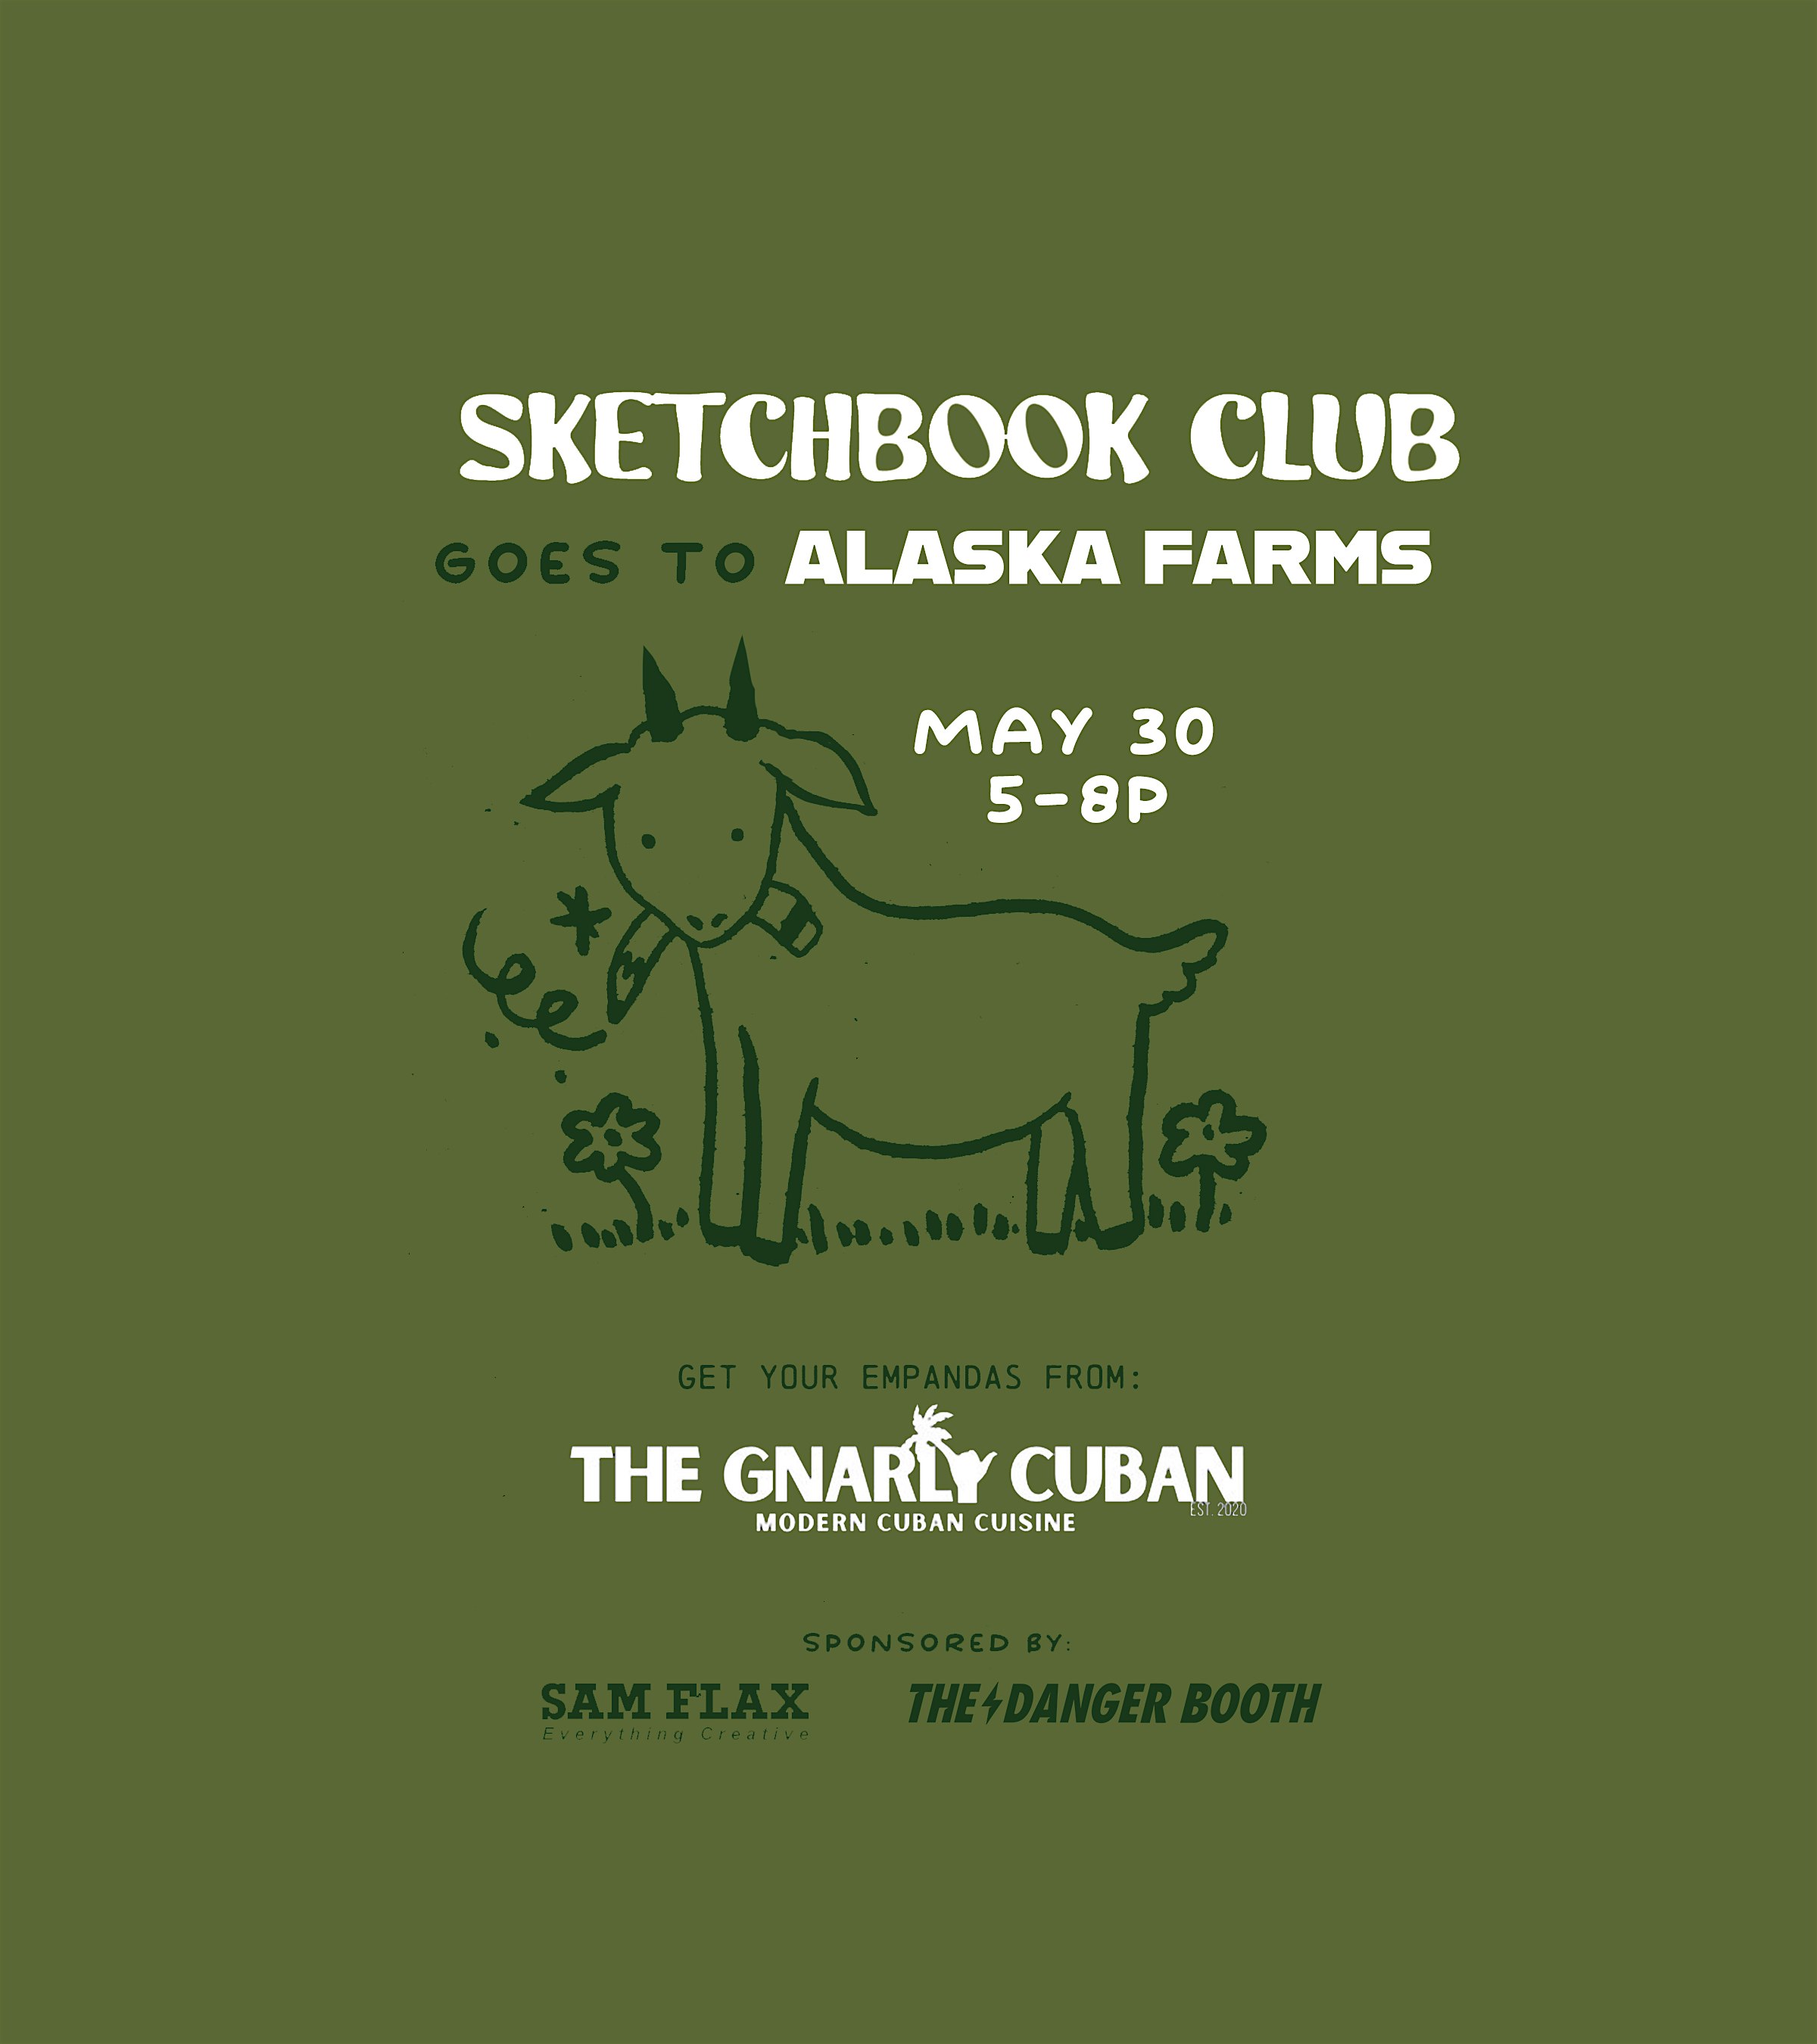 Sketchbook Club goes to Alaska Farms